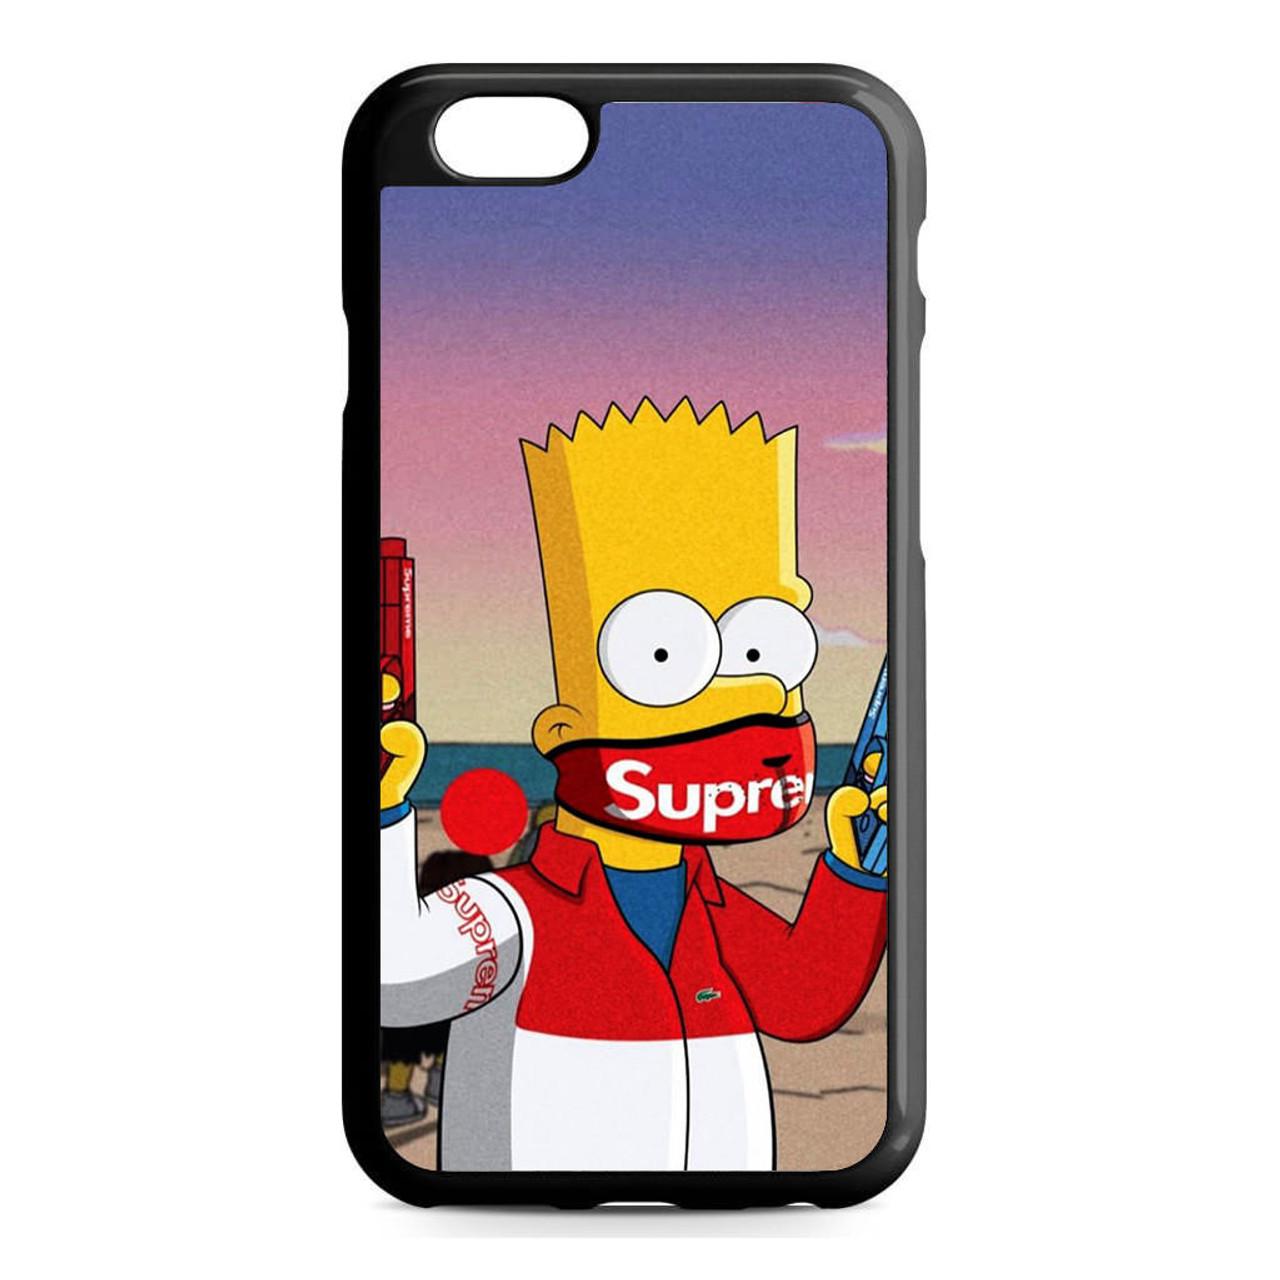 Bart Supreme Iphone 6 6s Case Ggians